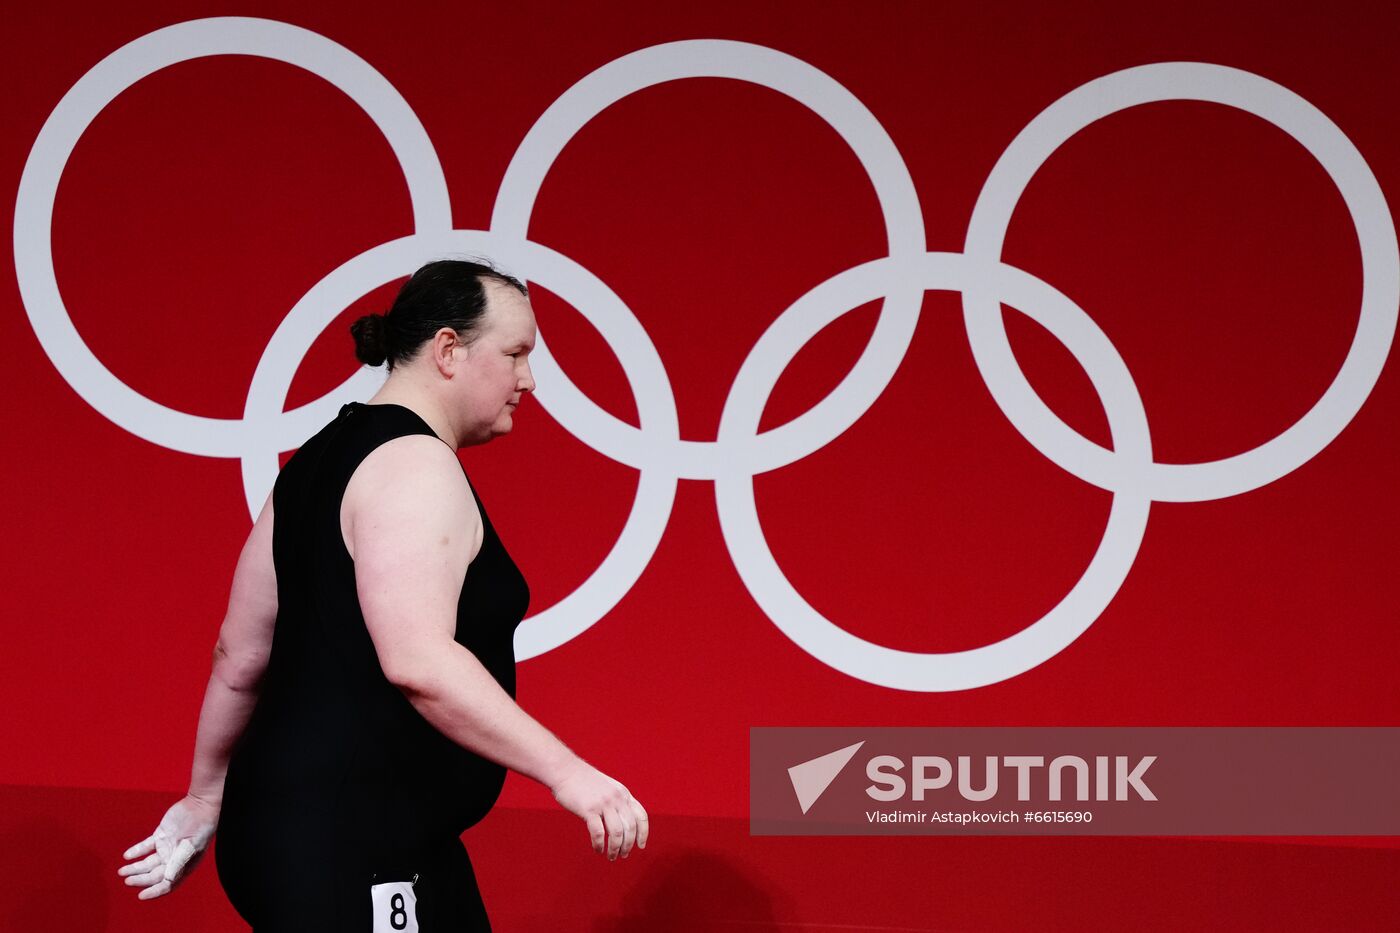 Japan Olympics 2020 Transgender Weightlifter Debut